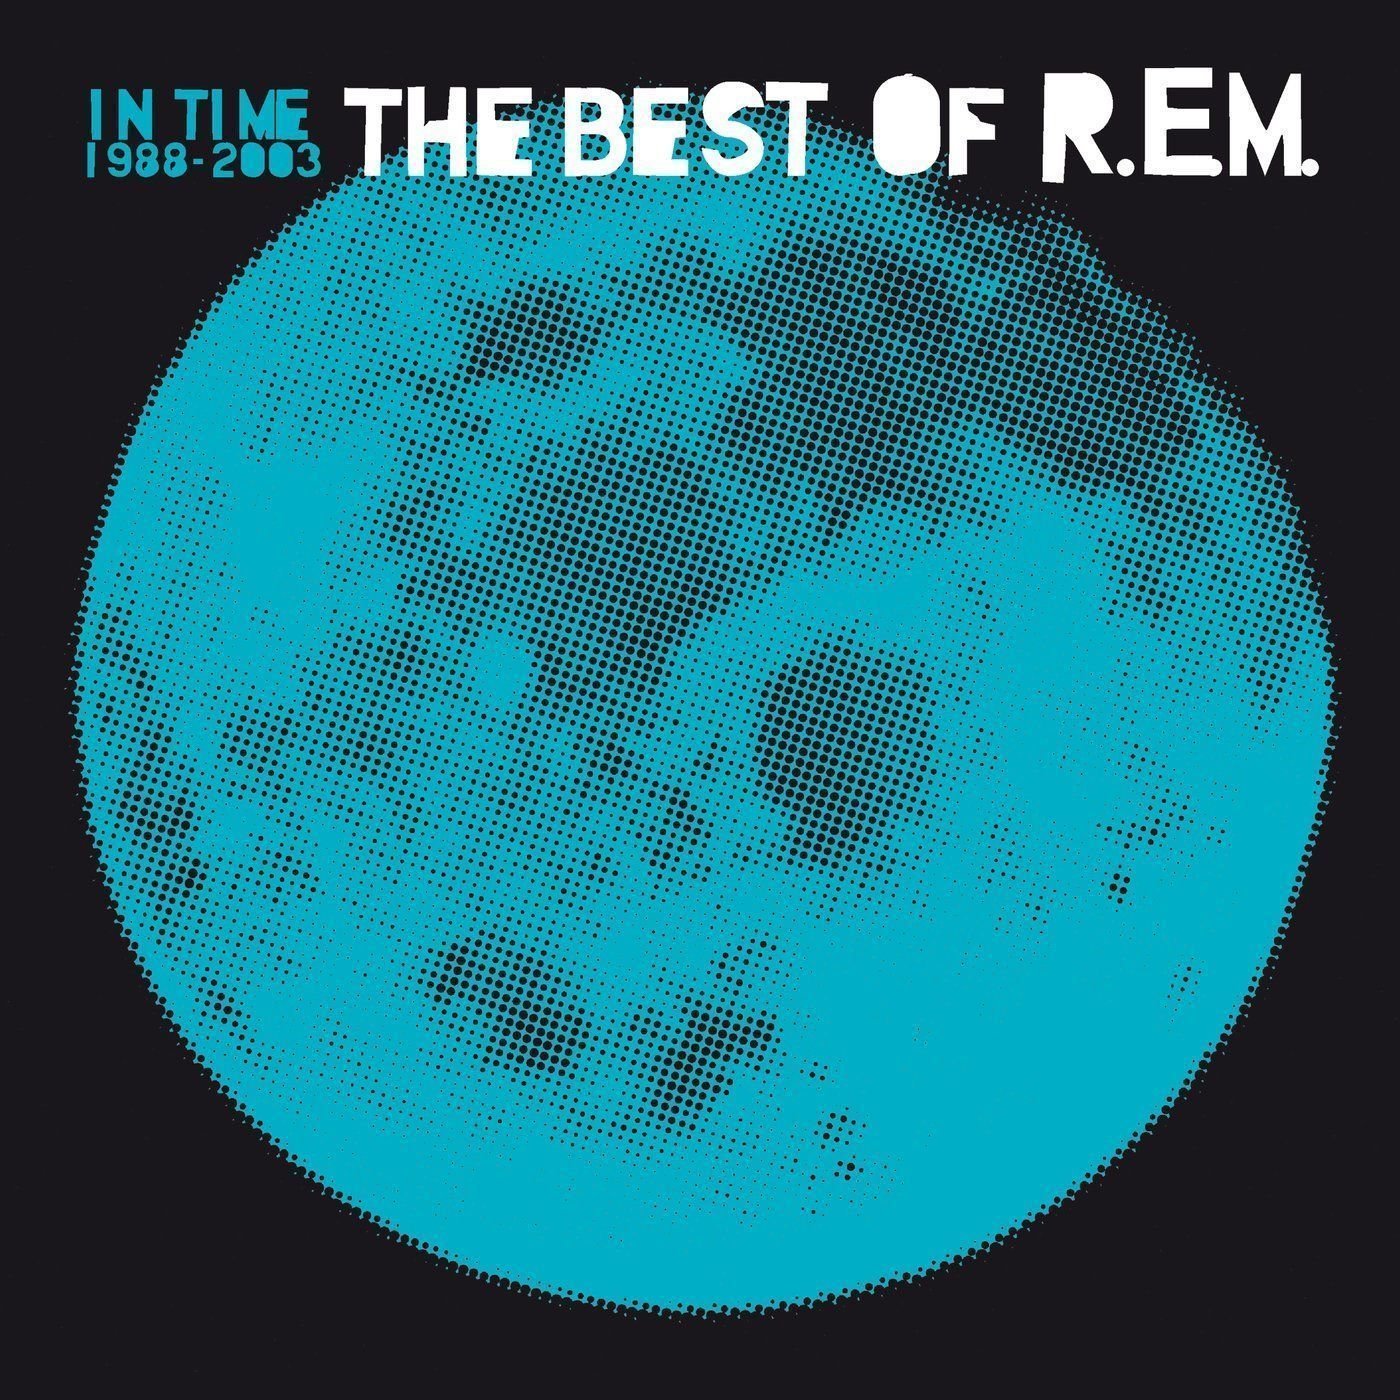 Płyta winylowa R.E.M. - In Time: The Best Of R.E.M. 1988-2003 (2 LP)